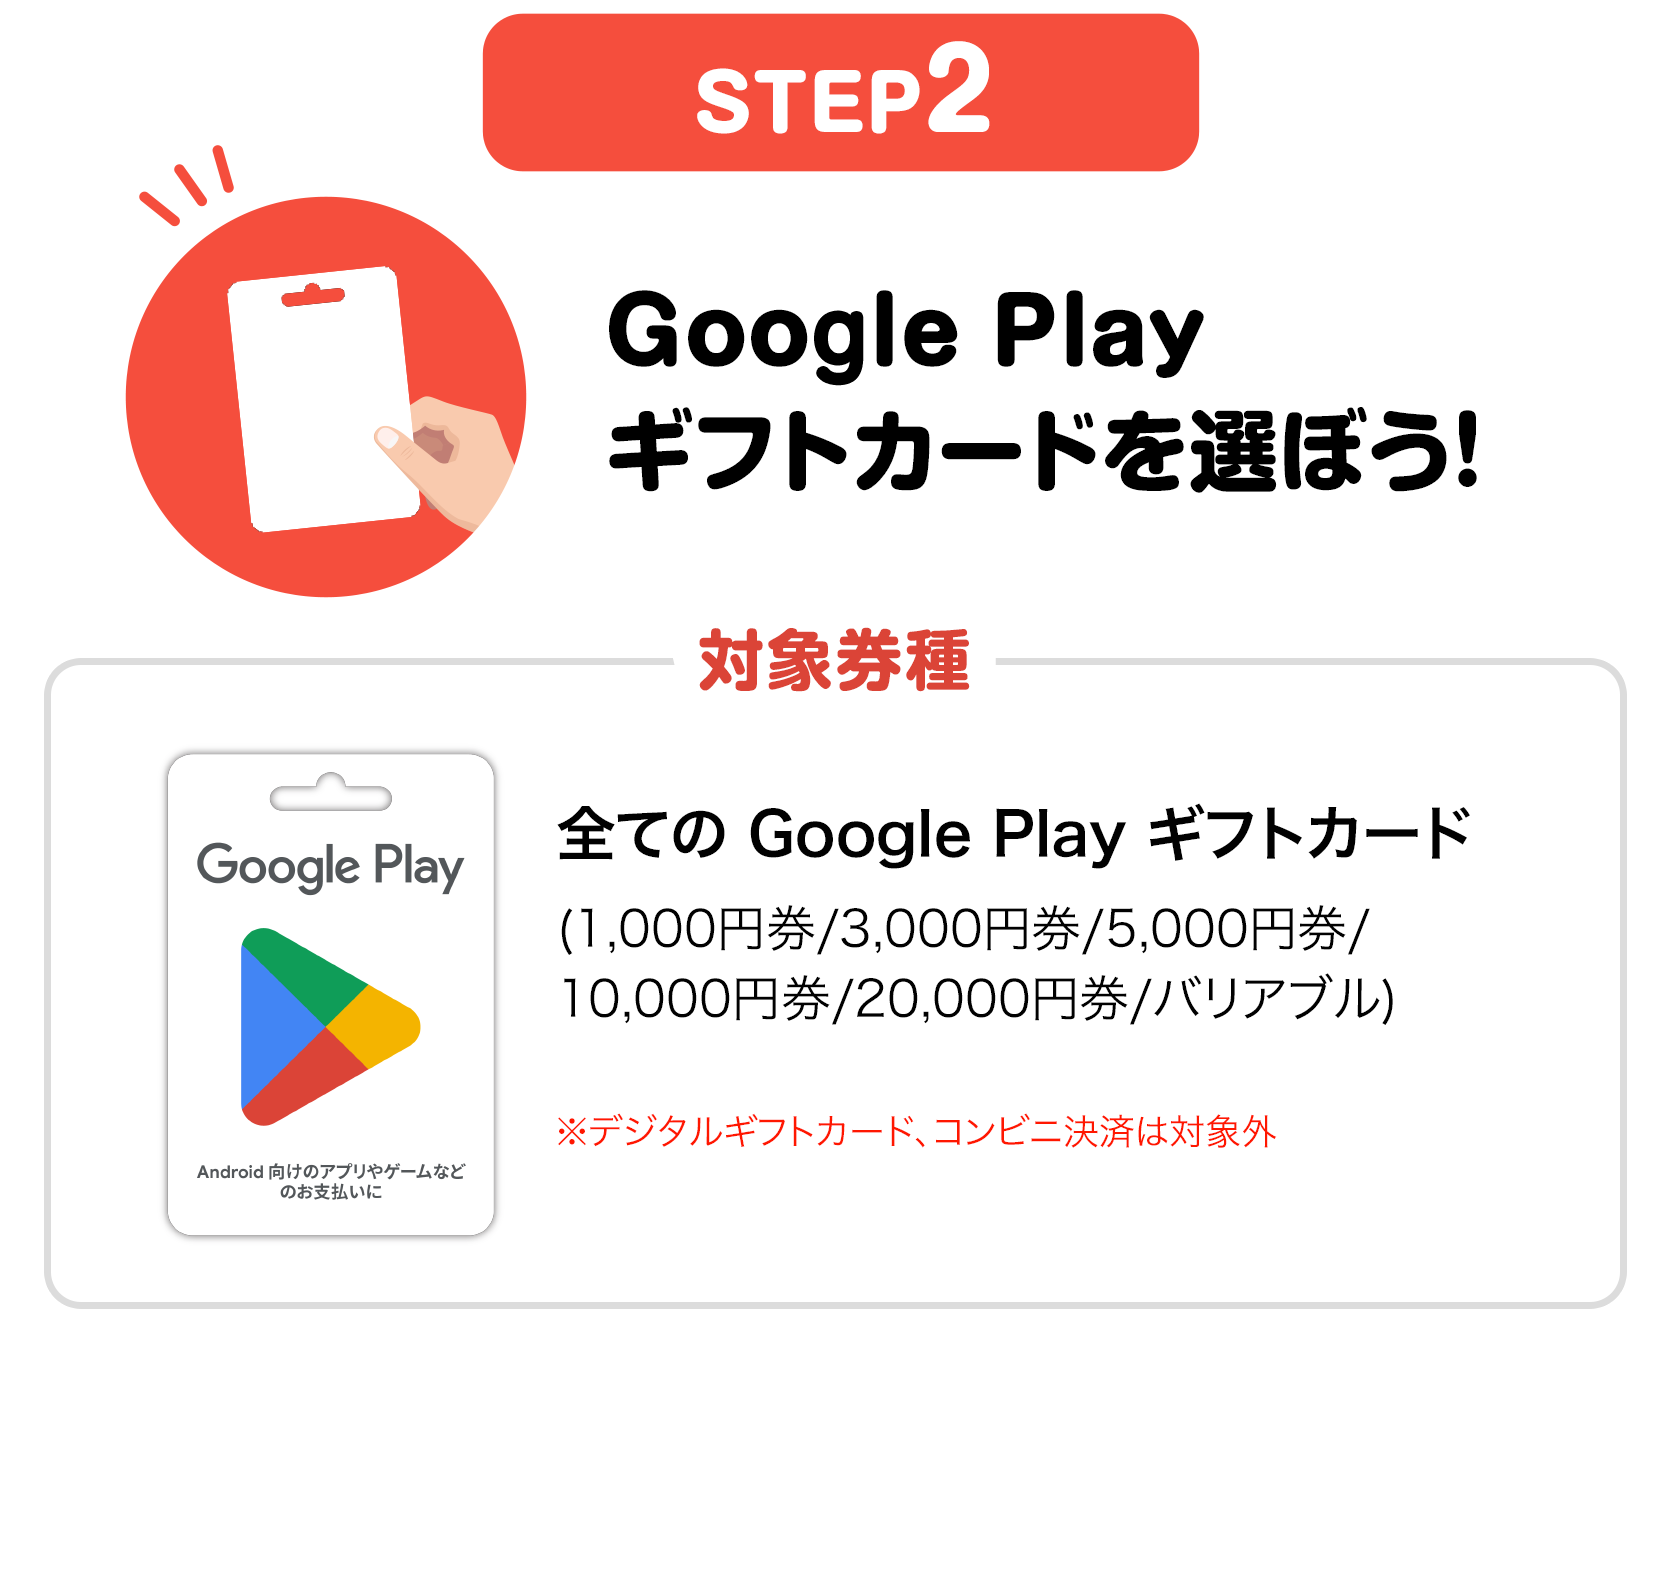 STEP2 Google Play ギフトカードを選ぼう！ 対象券種 全ての Google Play ギフトカード (1,000円券/3,000円券/5,000円券/10,000円券/20,000円券/バリアブル) ※デジタルギフトカード、コンビニ決済は対象外